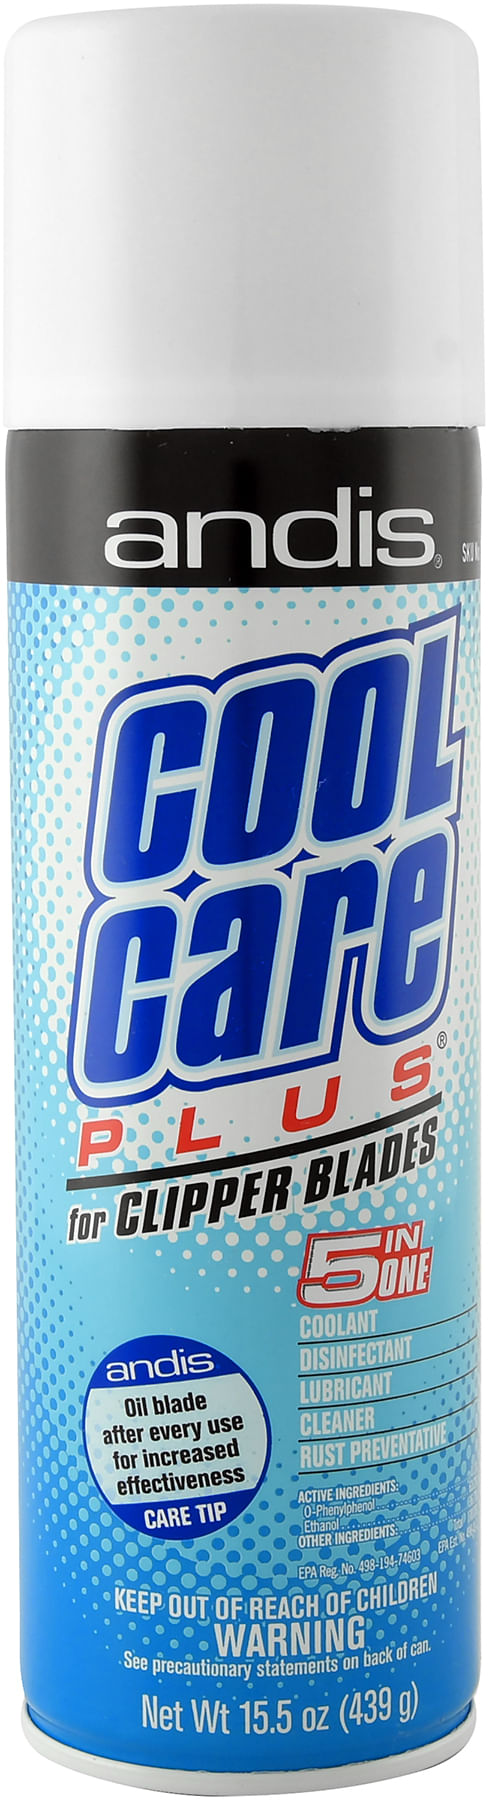 Andis Cool Care Plus, 15.5 oz